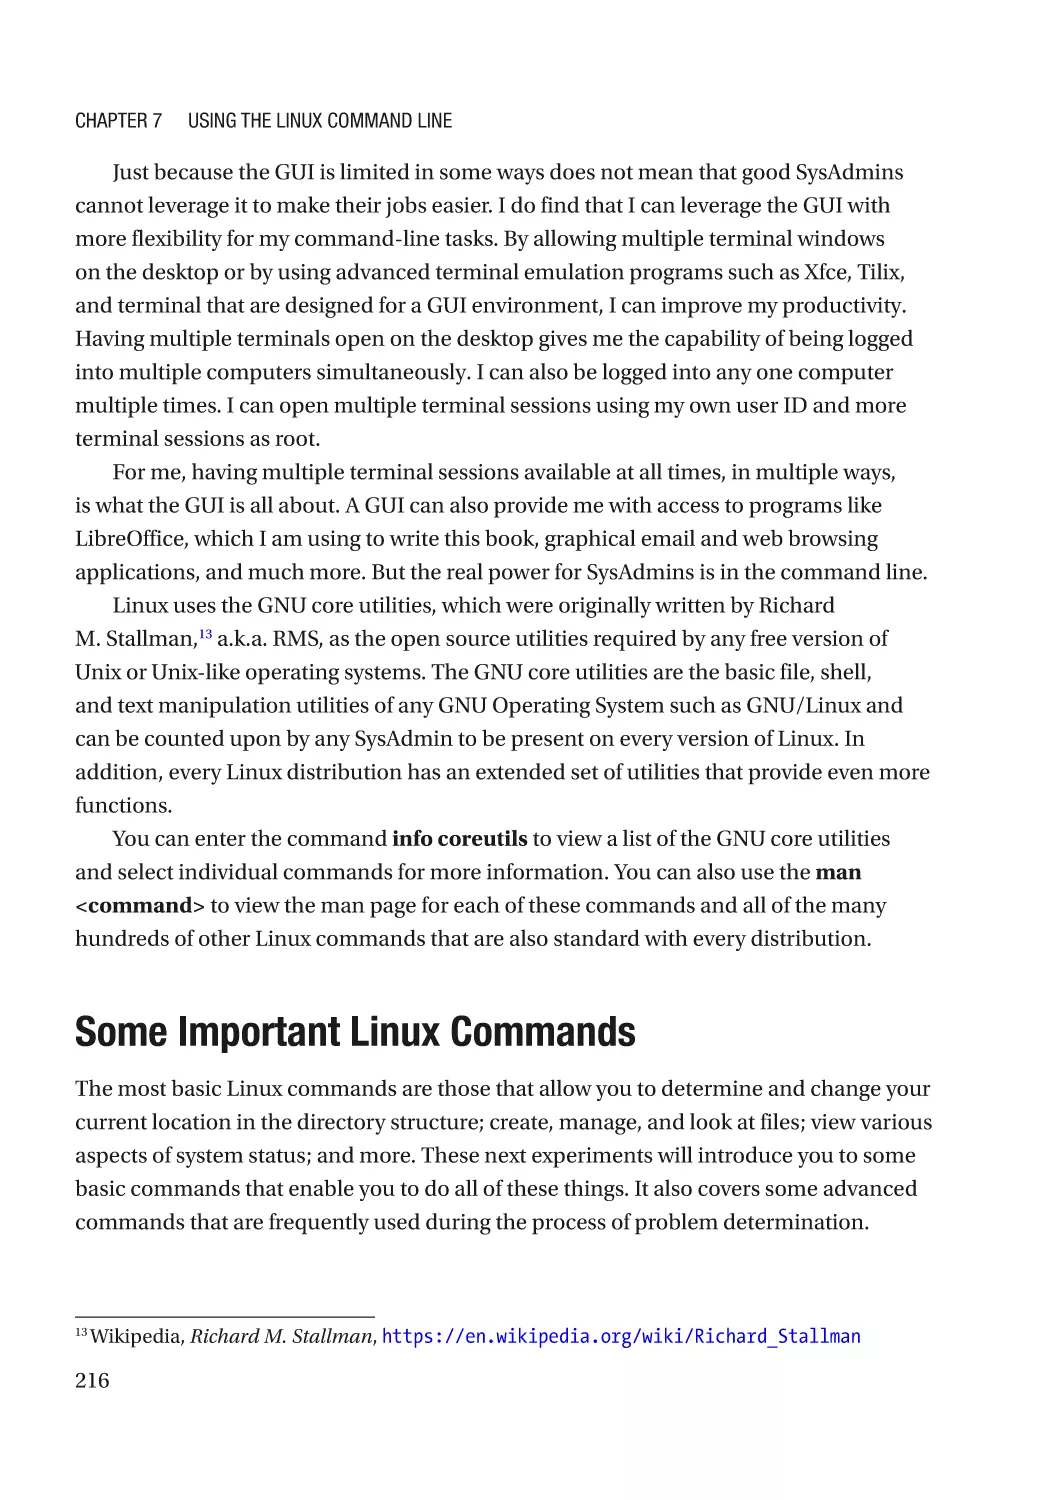 Some Important Linux Commands